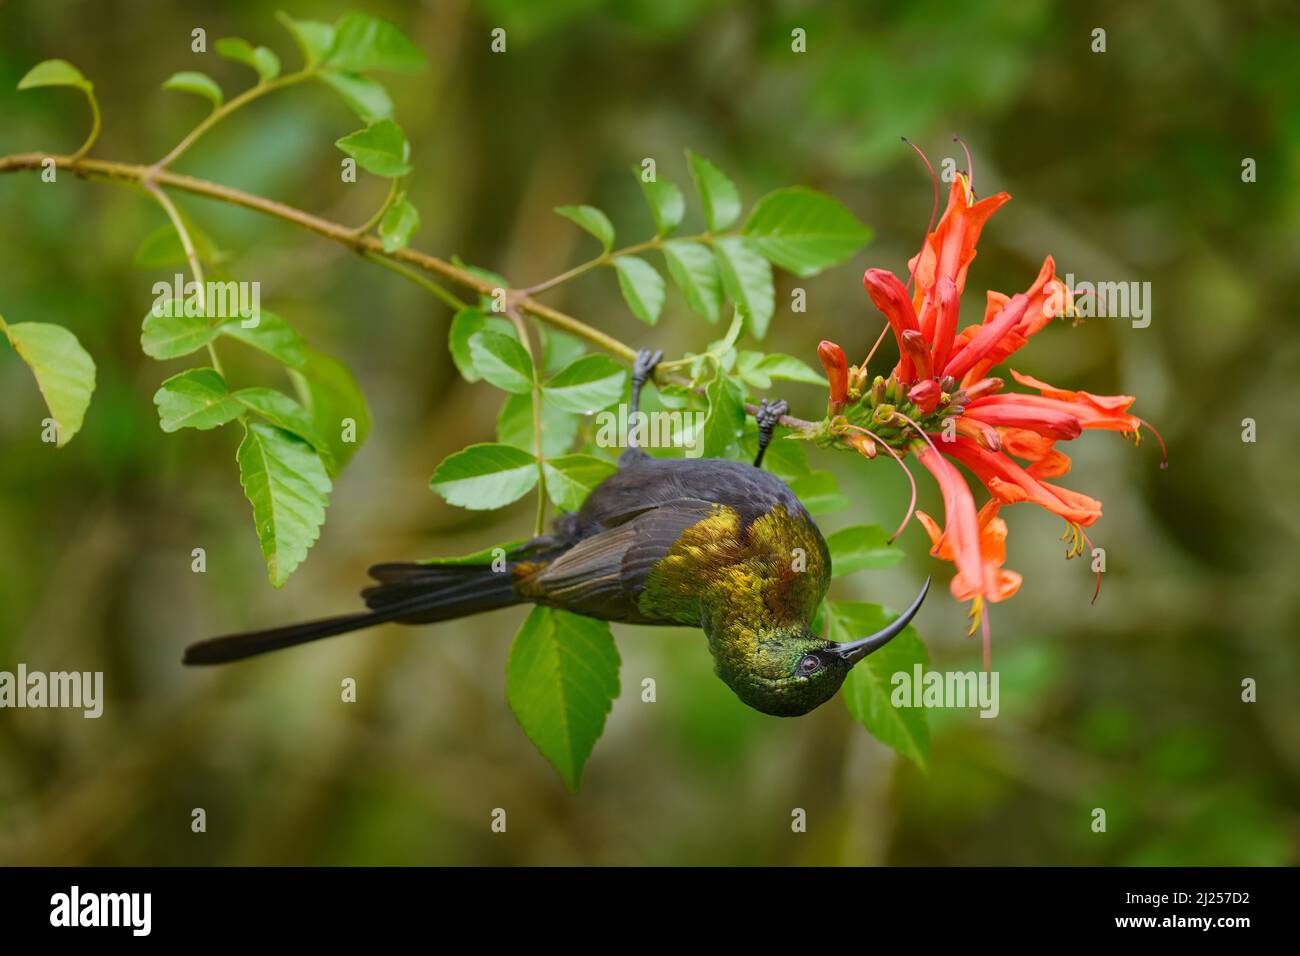 Bronzy sunbird, Nectarinia kilimensis,bird in the green vegetation, Uganda. Africa sunbird sitting on the branch.  Green, yellow, red bird in the natu Stock Photo